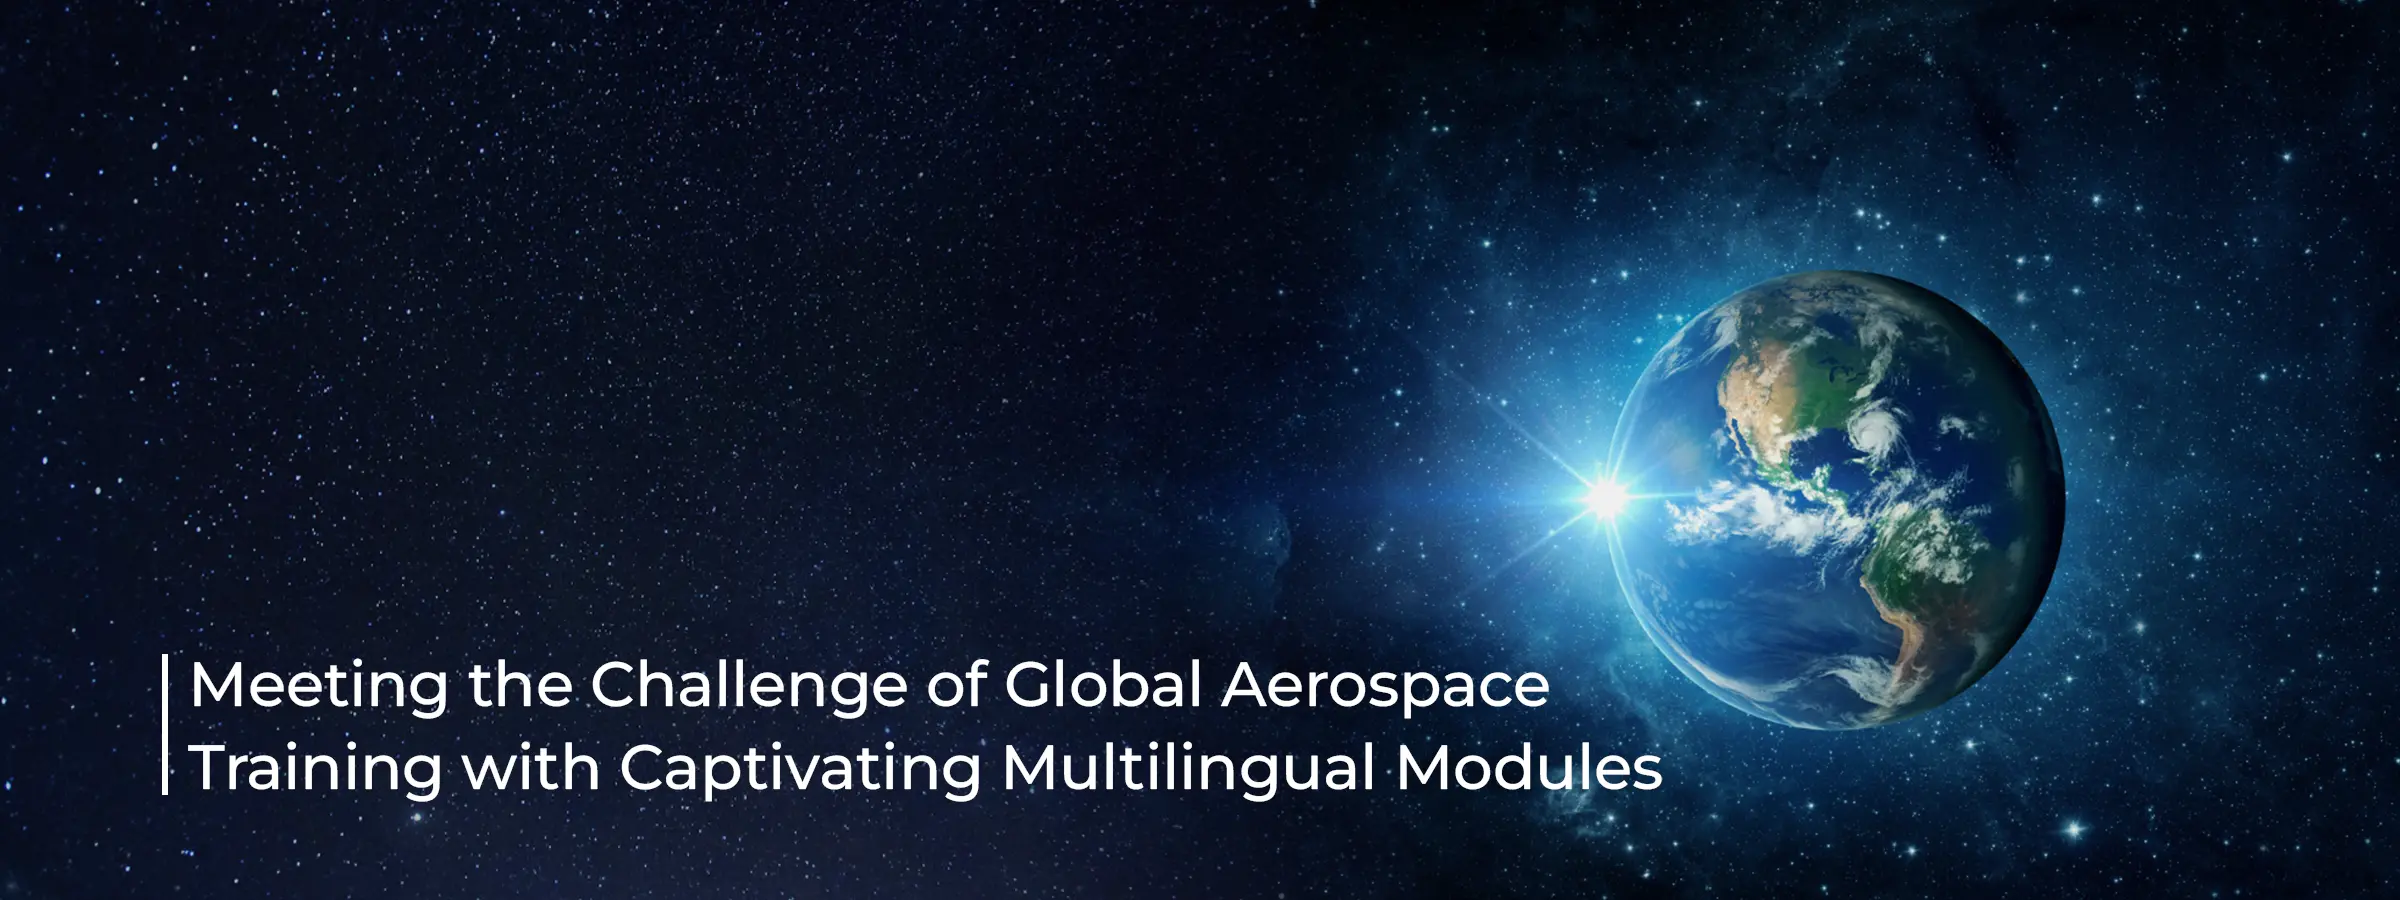 aerospace-and-defense-global-aerospace-training-industry-blog-banner